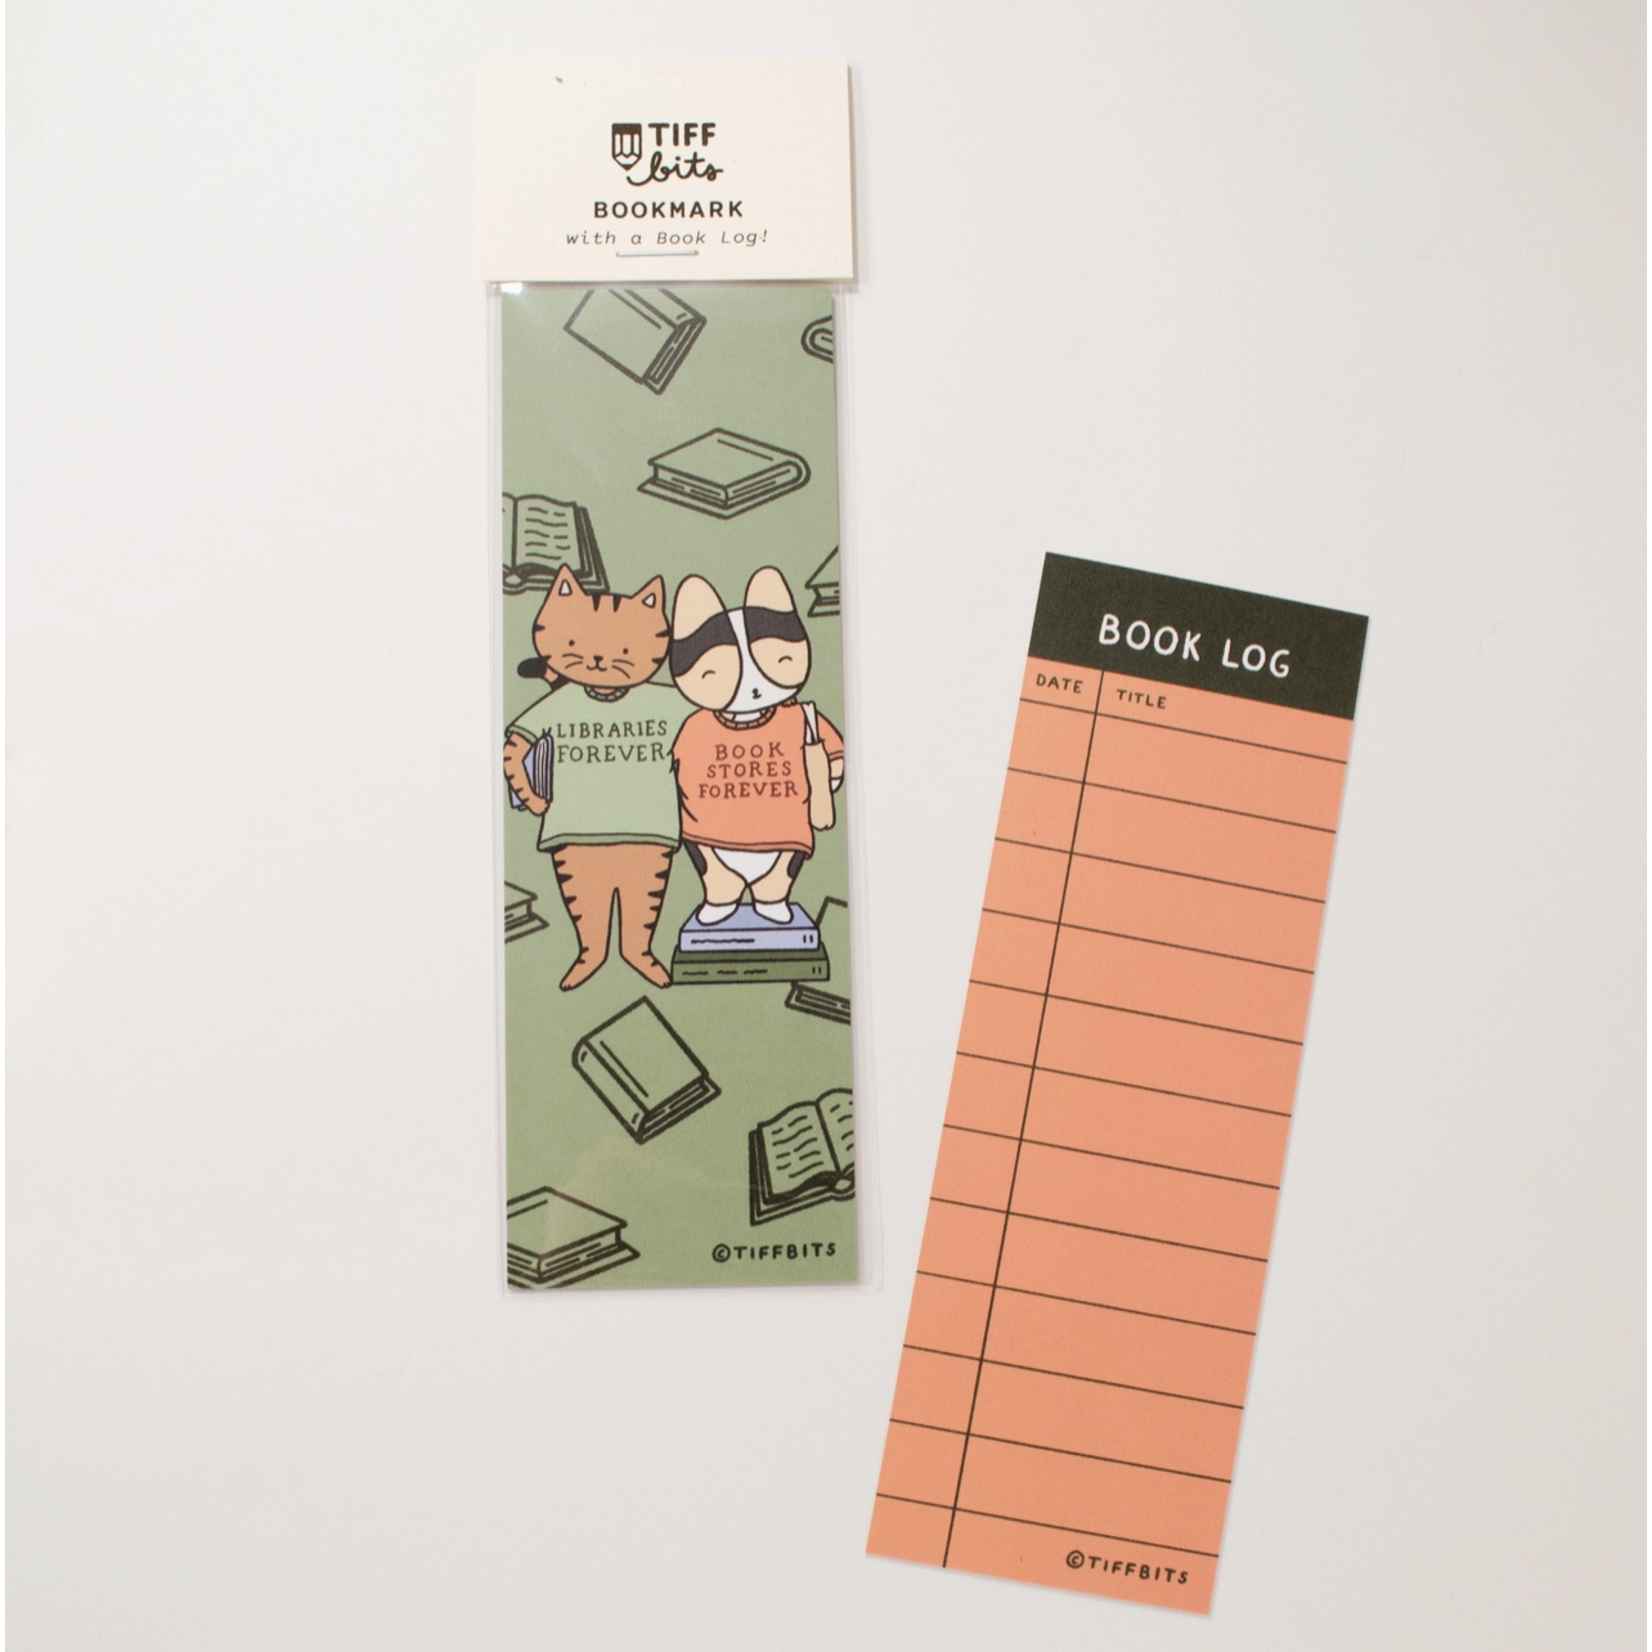 Tiffbits Libraries & Bookstores Forever Book Log Bookmark